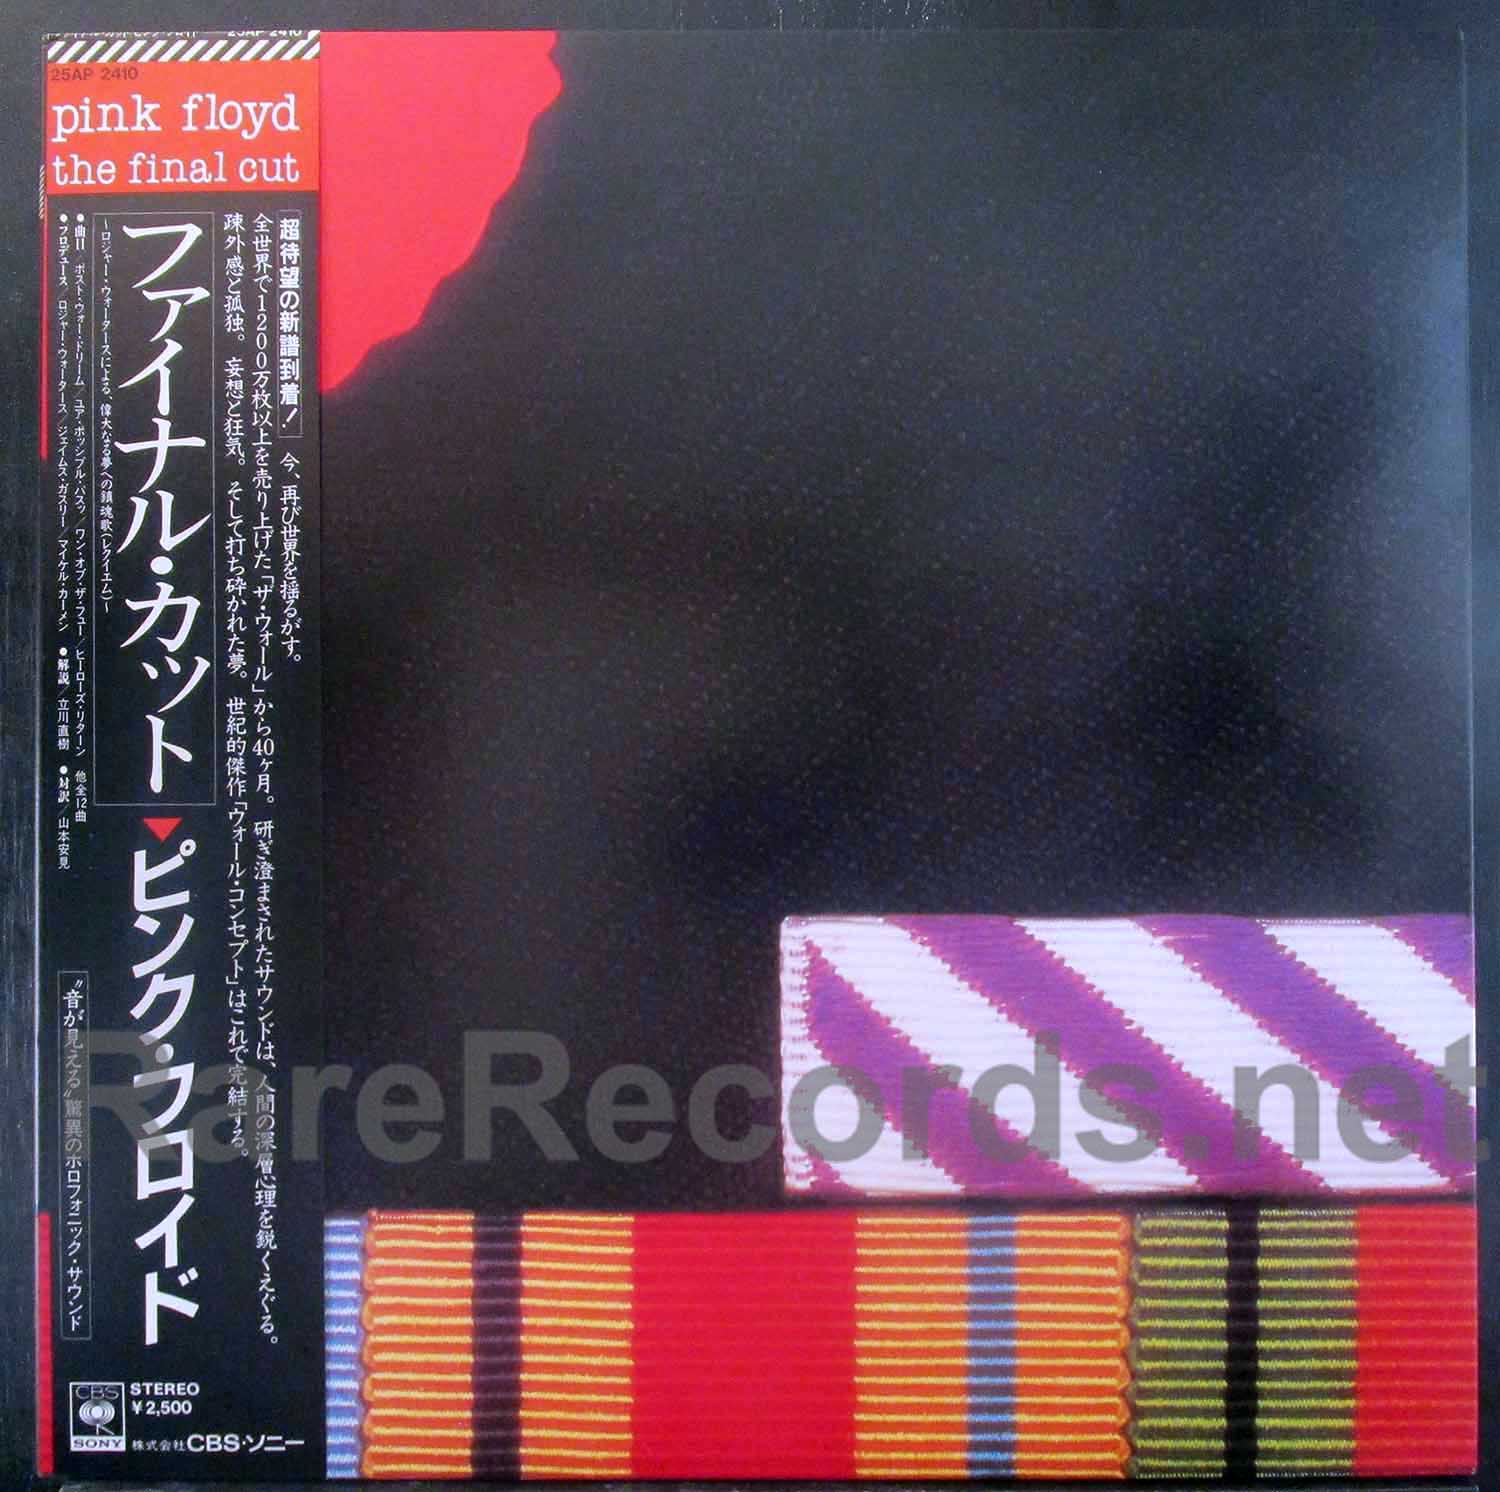 Pink Floyd – The Final Cut 1983 Japan LP with obi